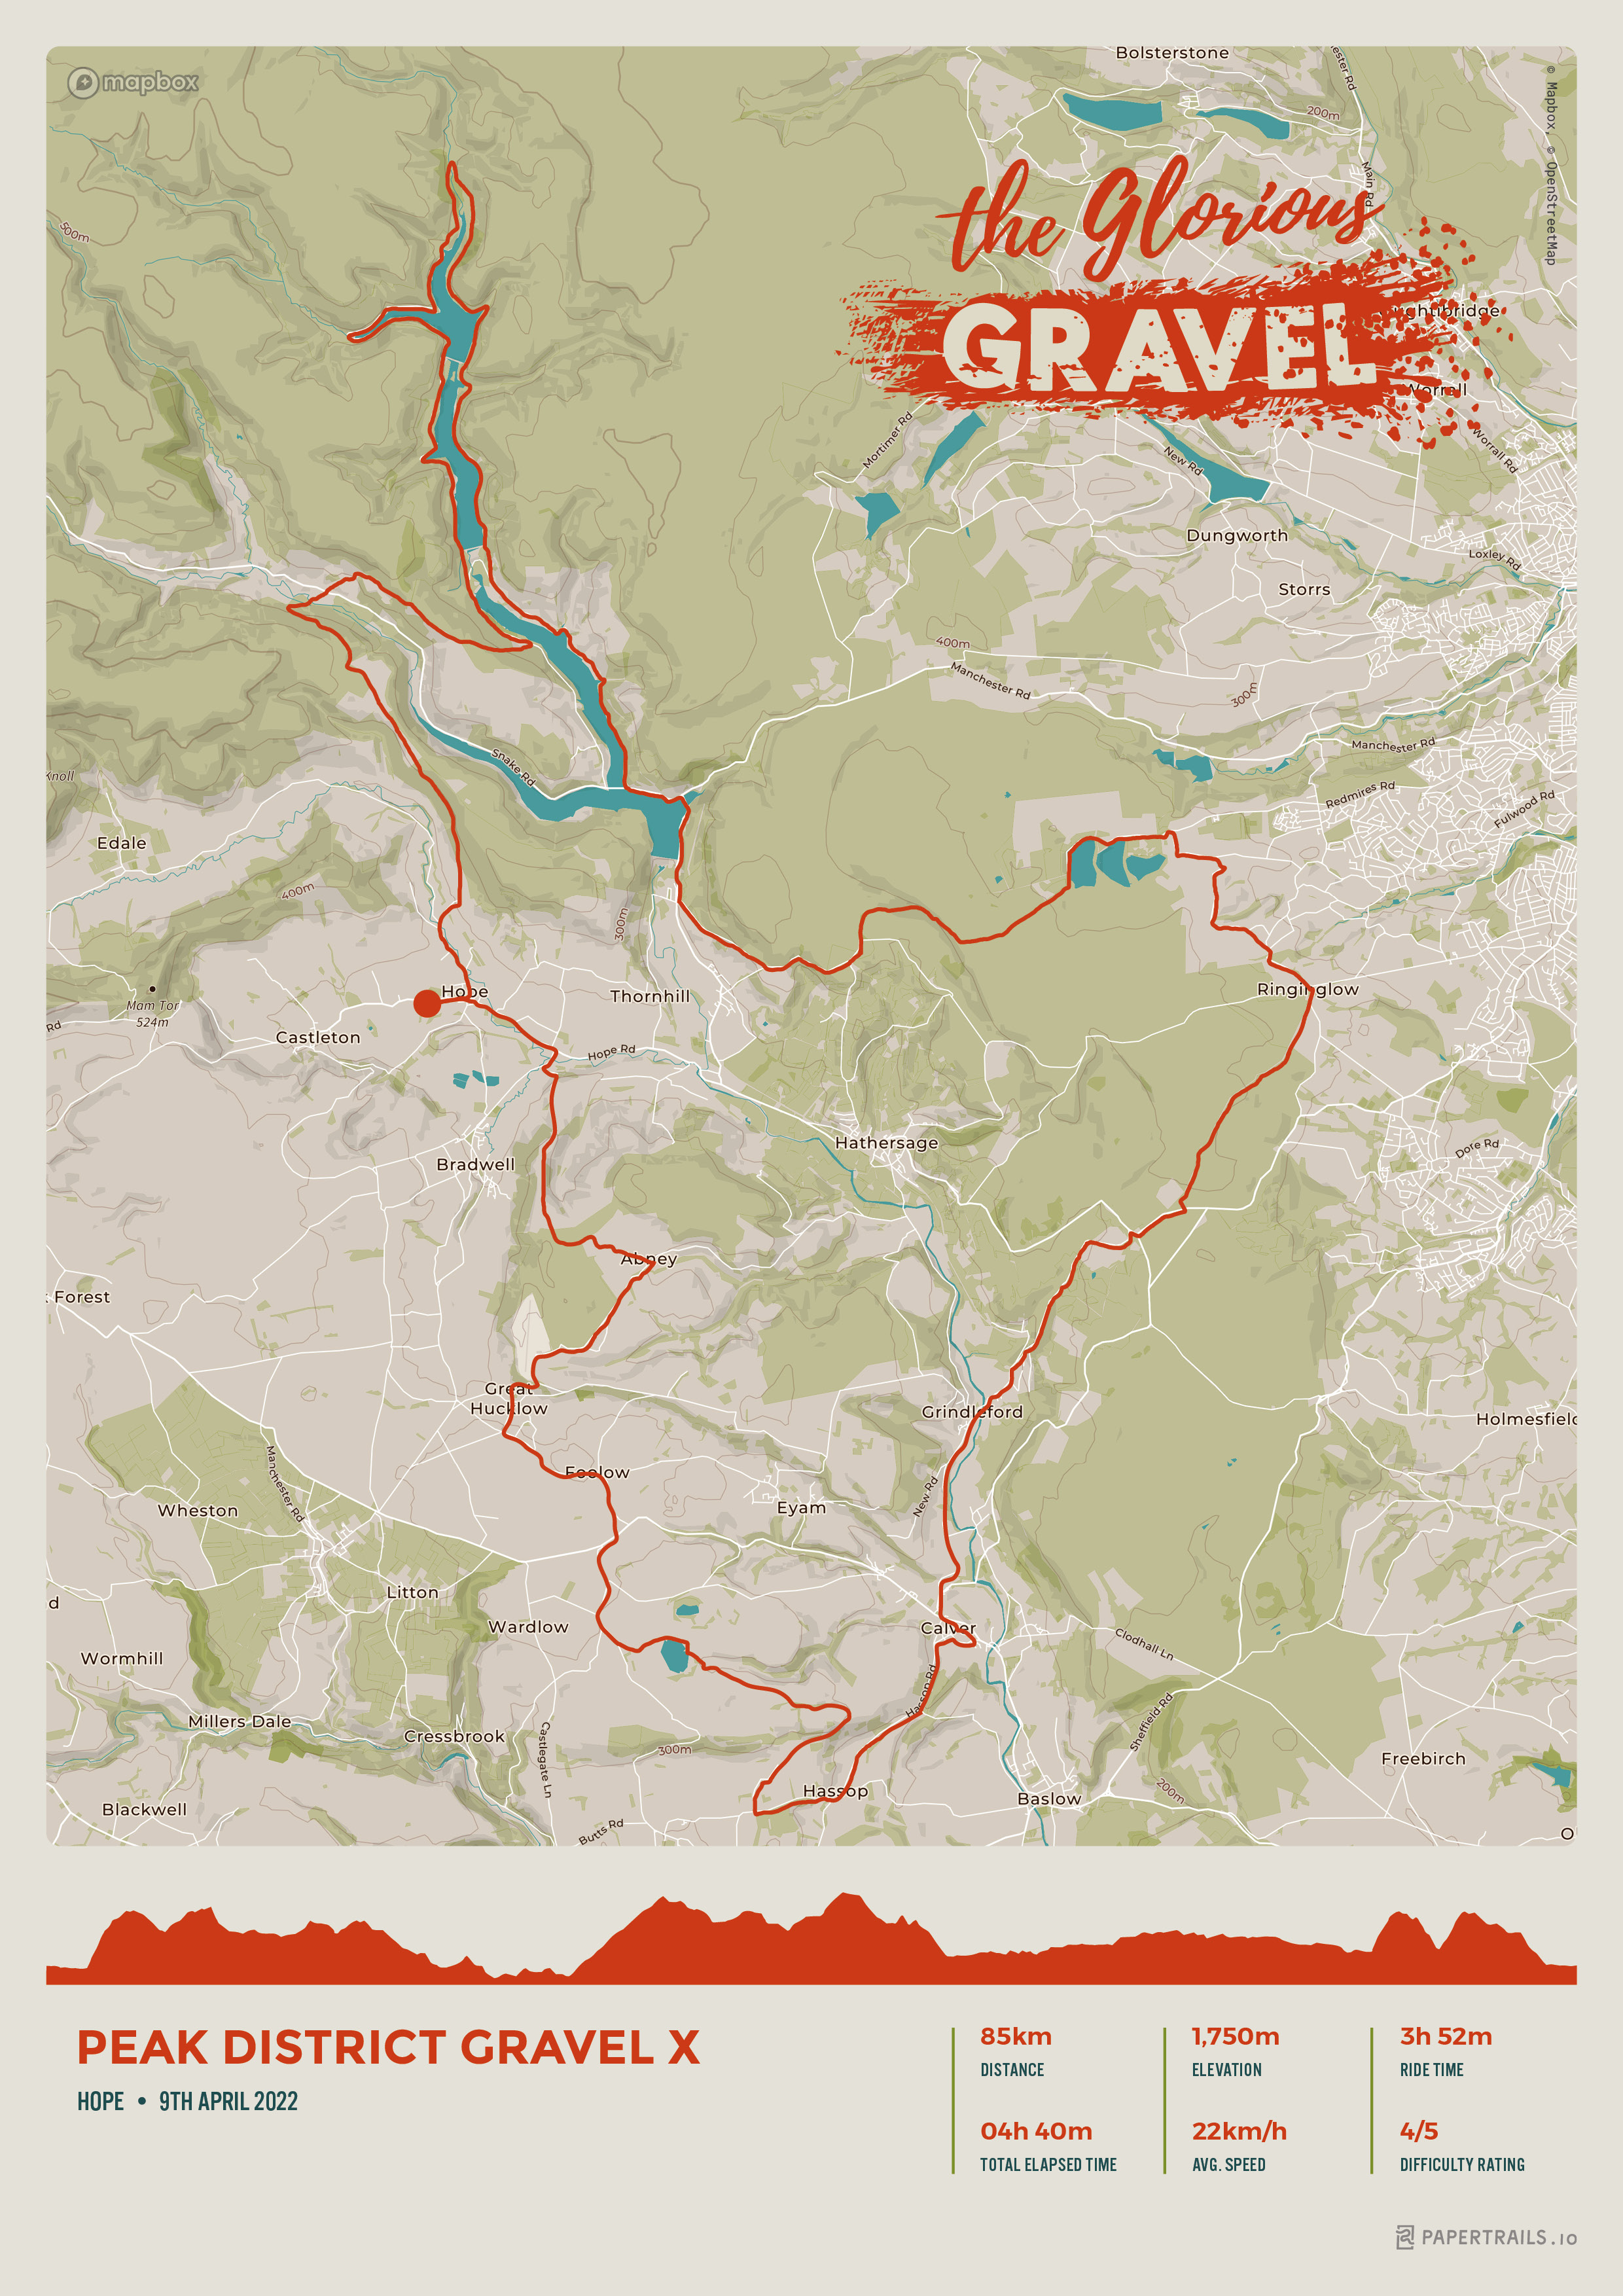 Peak District Gravel X